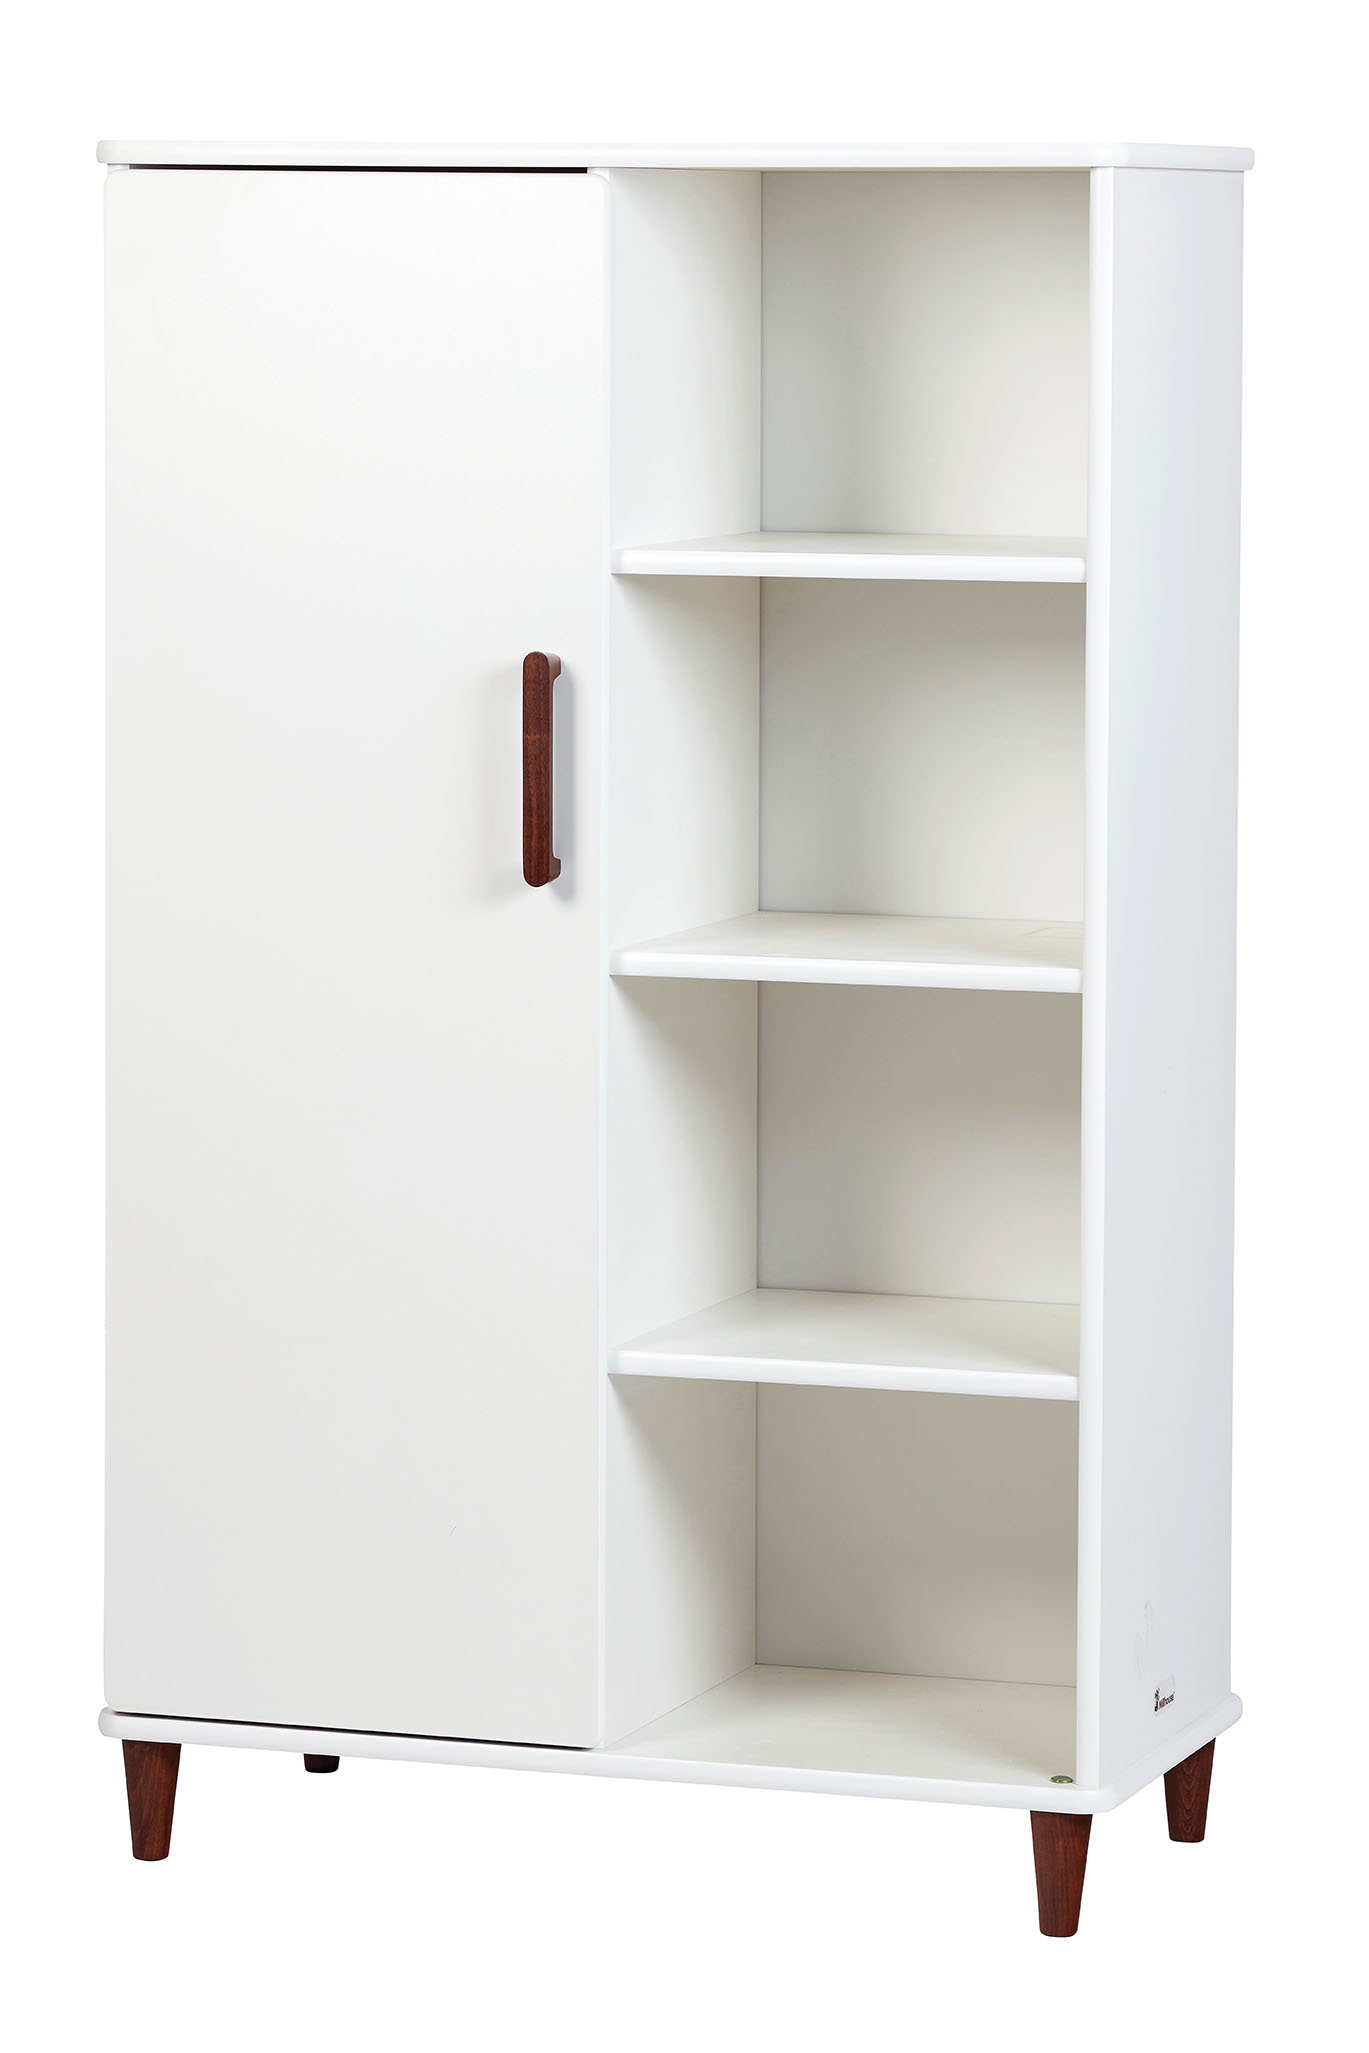 PT936-Millhouse-Early-Years-Furniture-White-Single-Cupboard-Door-Unit_Main_RGB.jpg